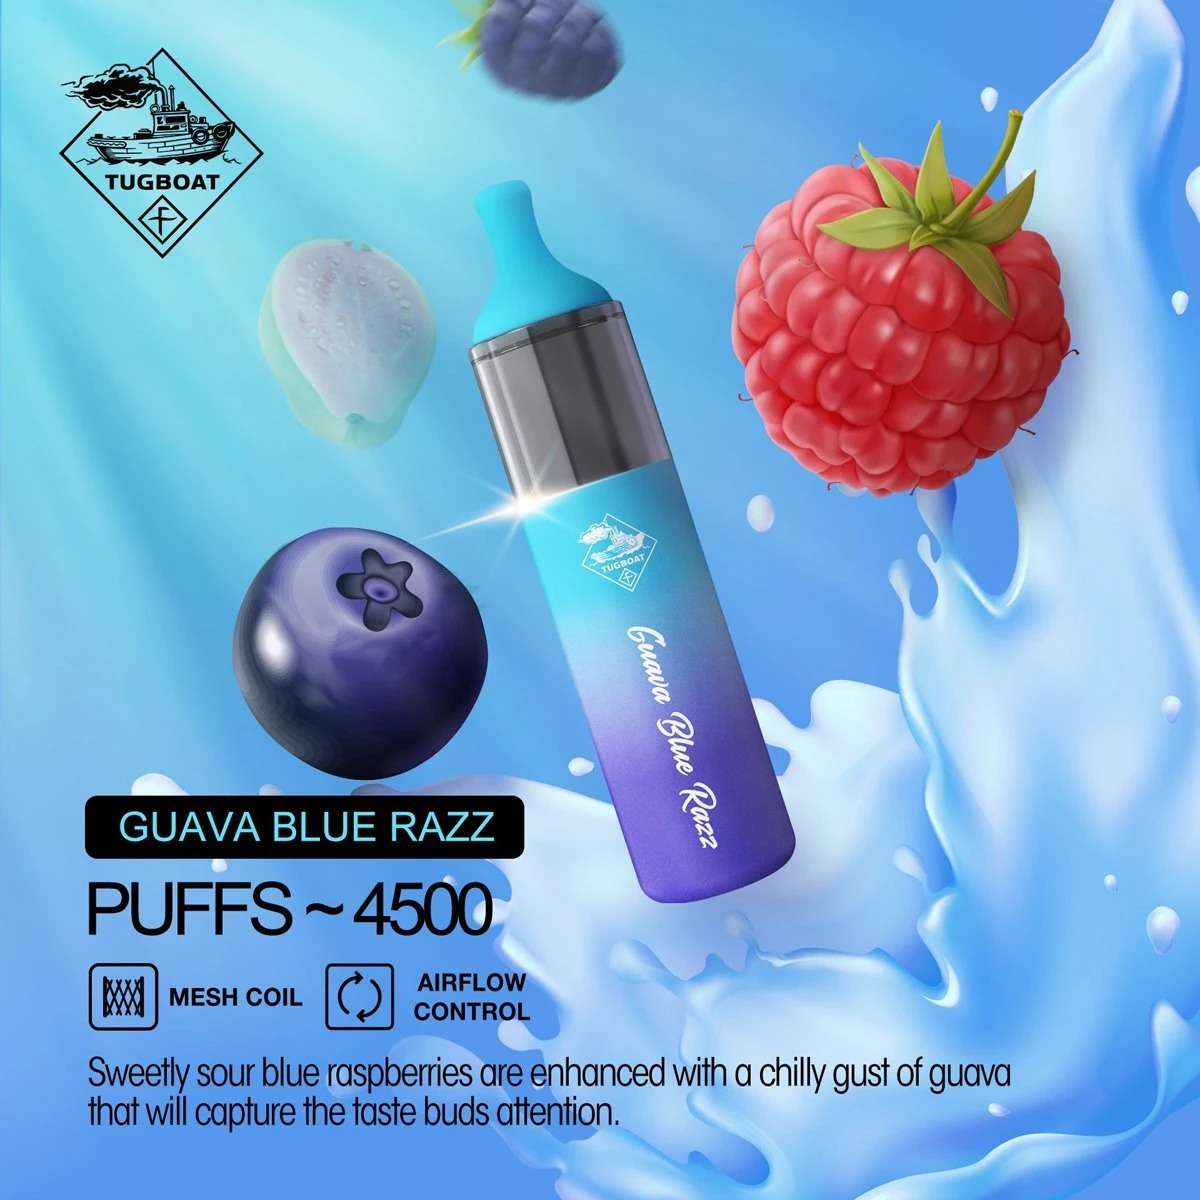 tugboat evo 4500 puffs disposable vape guava blue razz flavor Vape Dubai | Buy Vape Online in UAE - SmokeFree